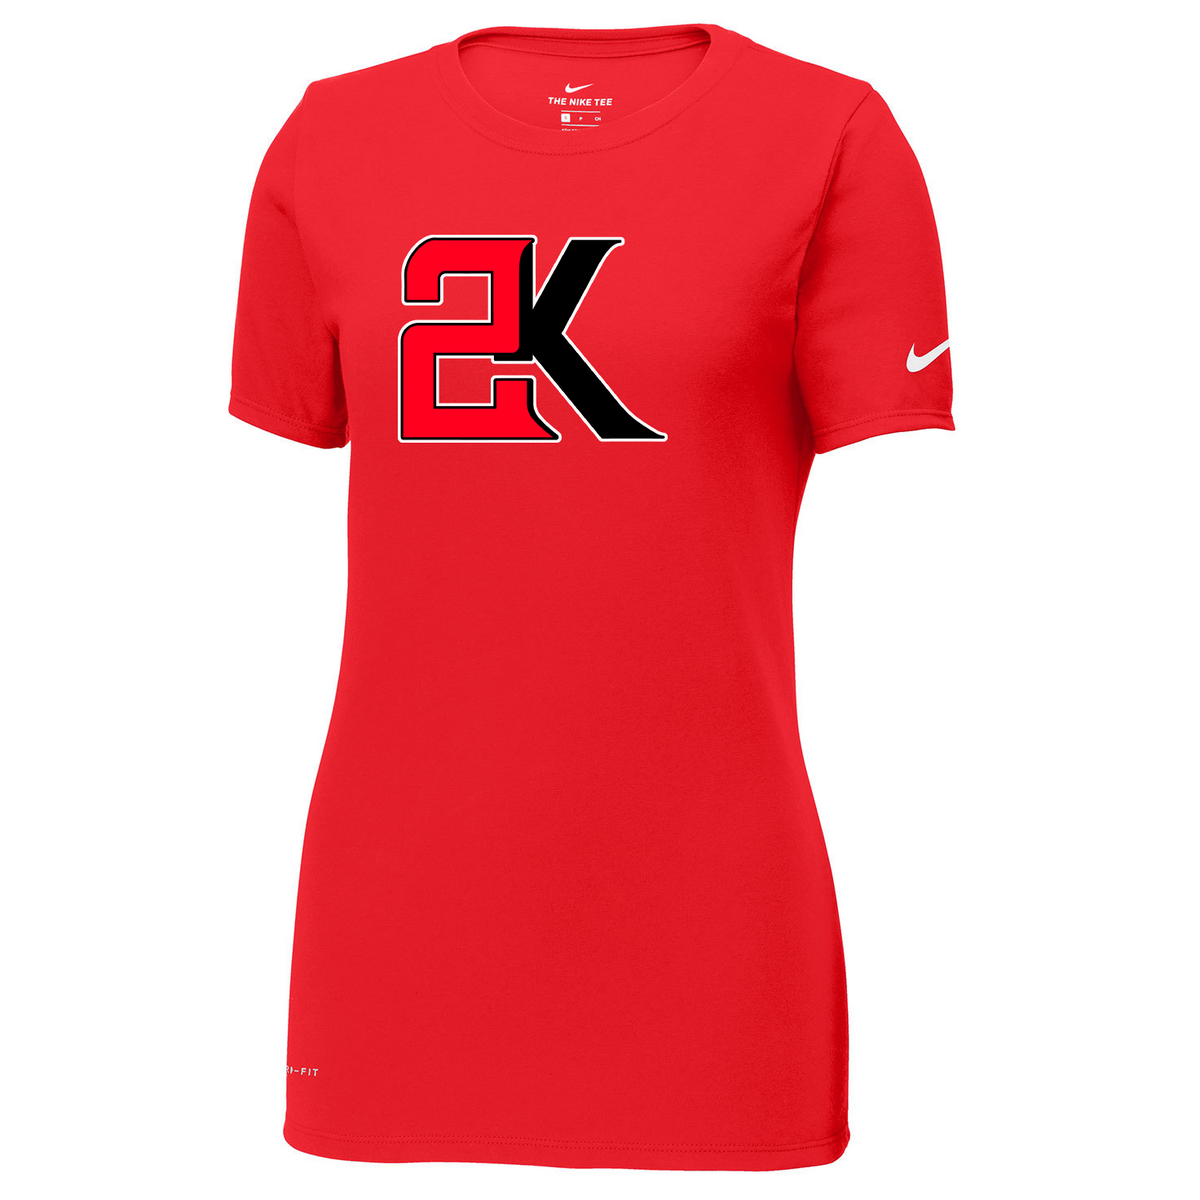 2K Softball Nike Ladies Dri-FIT Tee